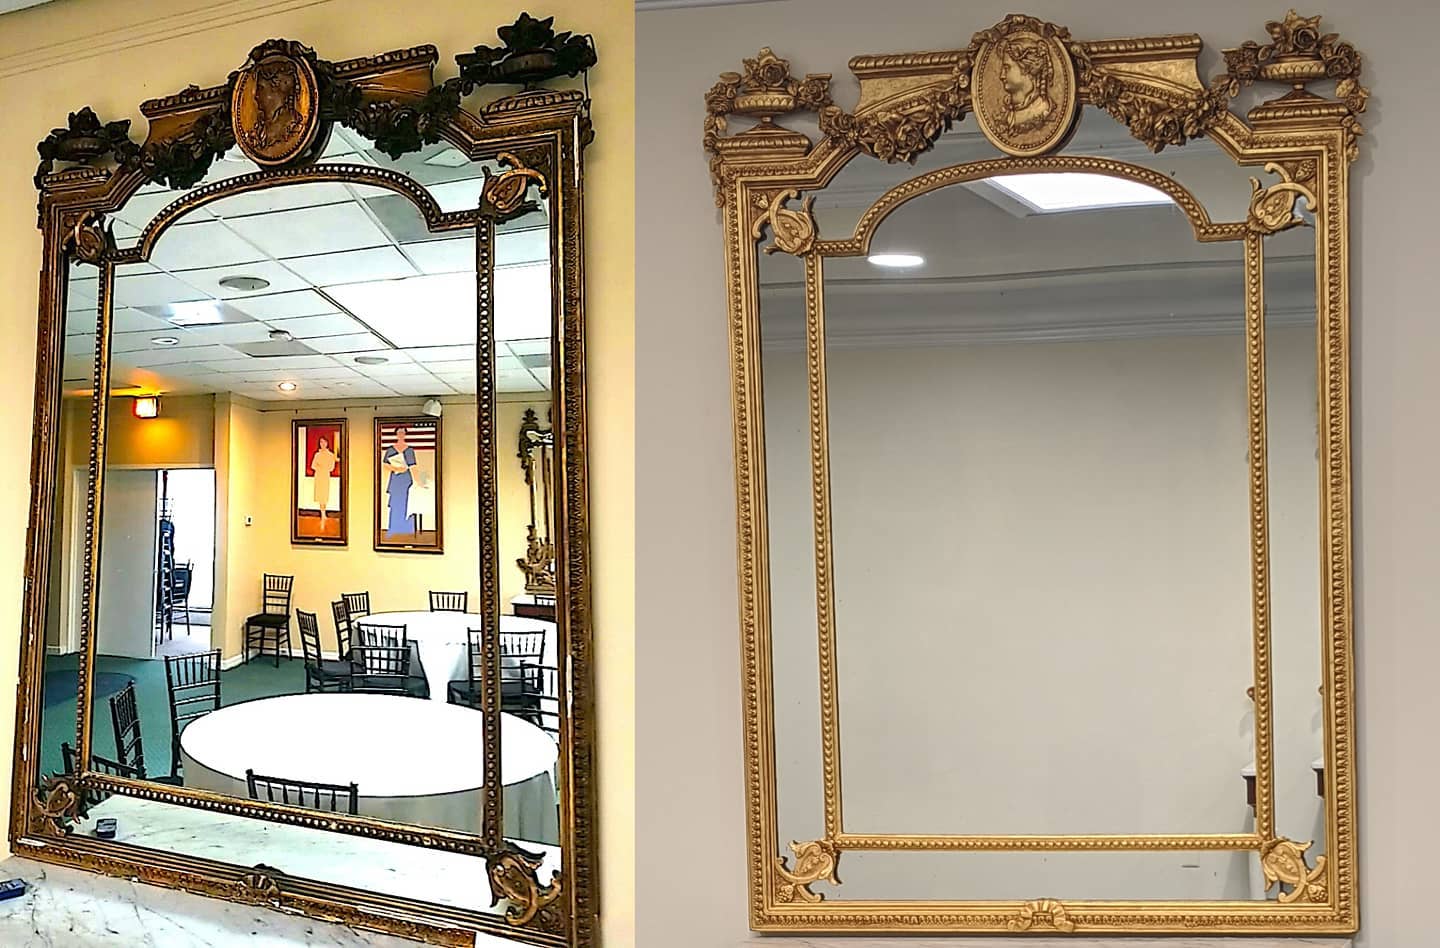 Women's National Democratic Club Victorian Mirror Frame Restoration